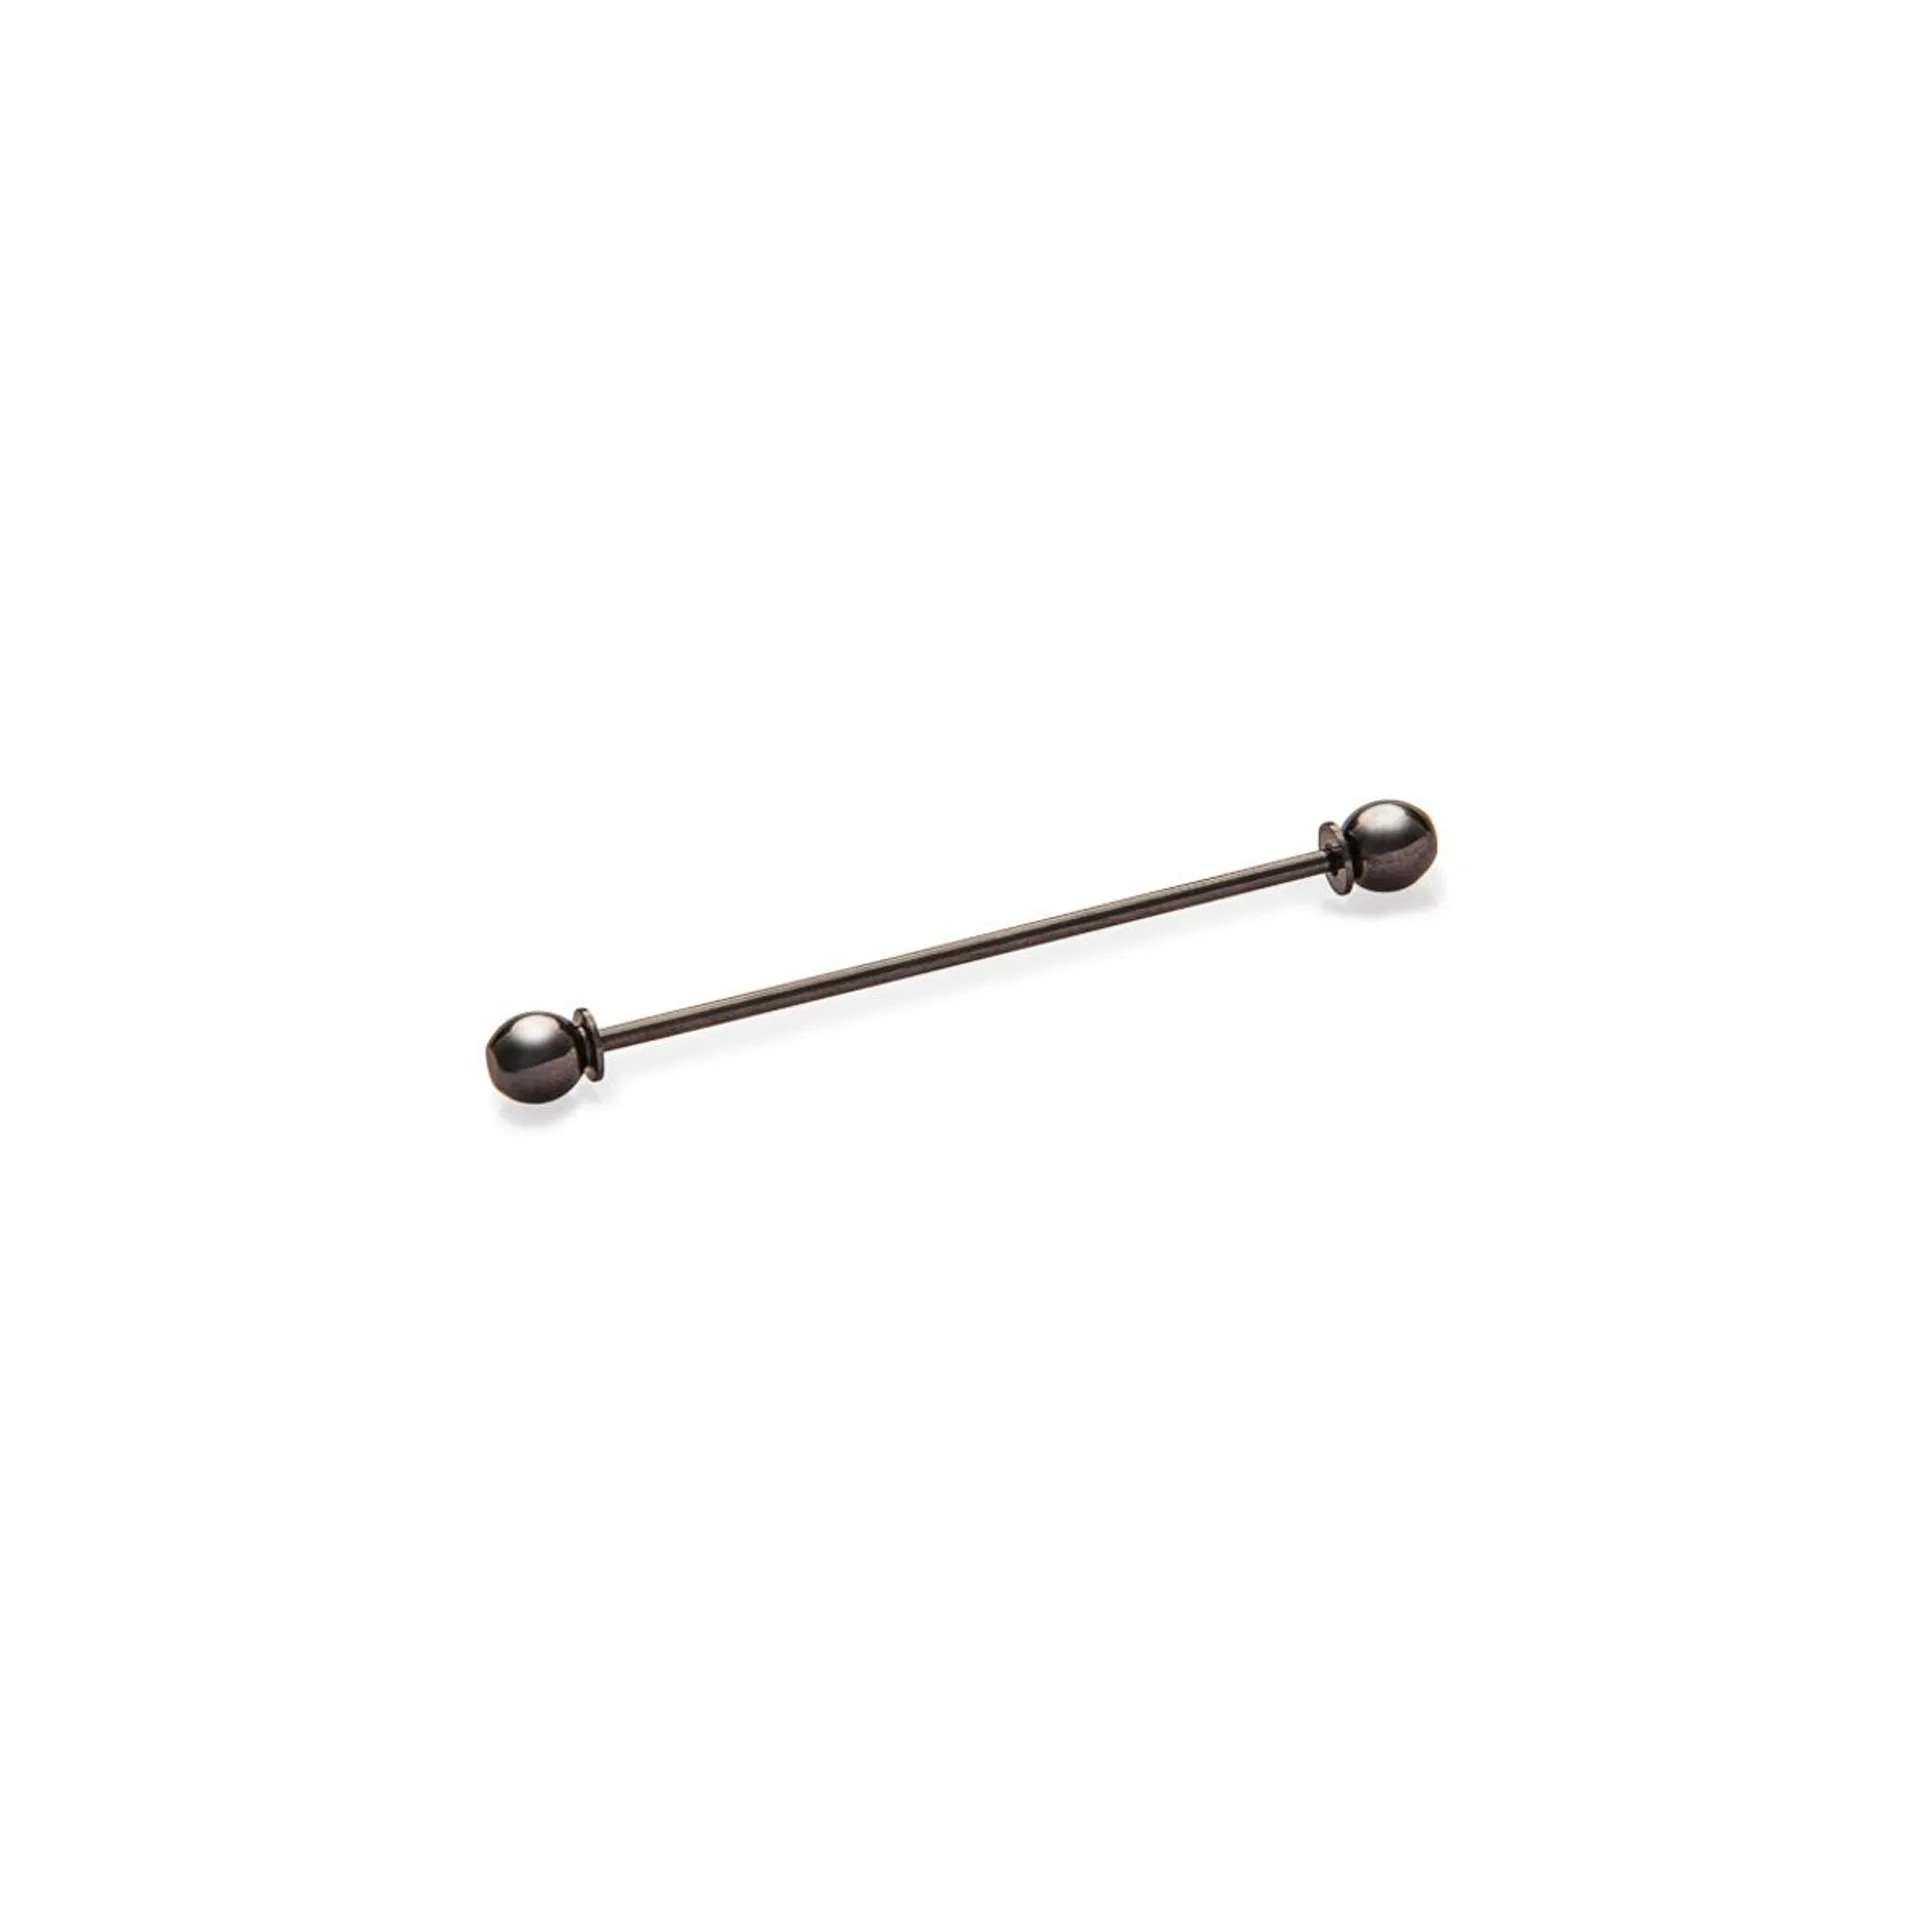 Steel gray pin for pin collar